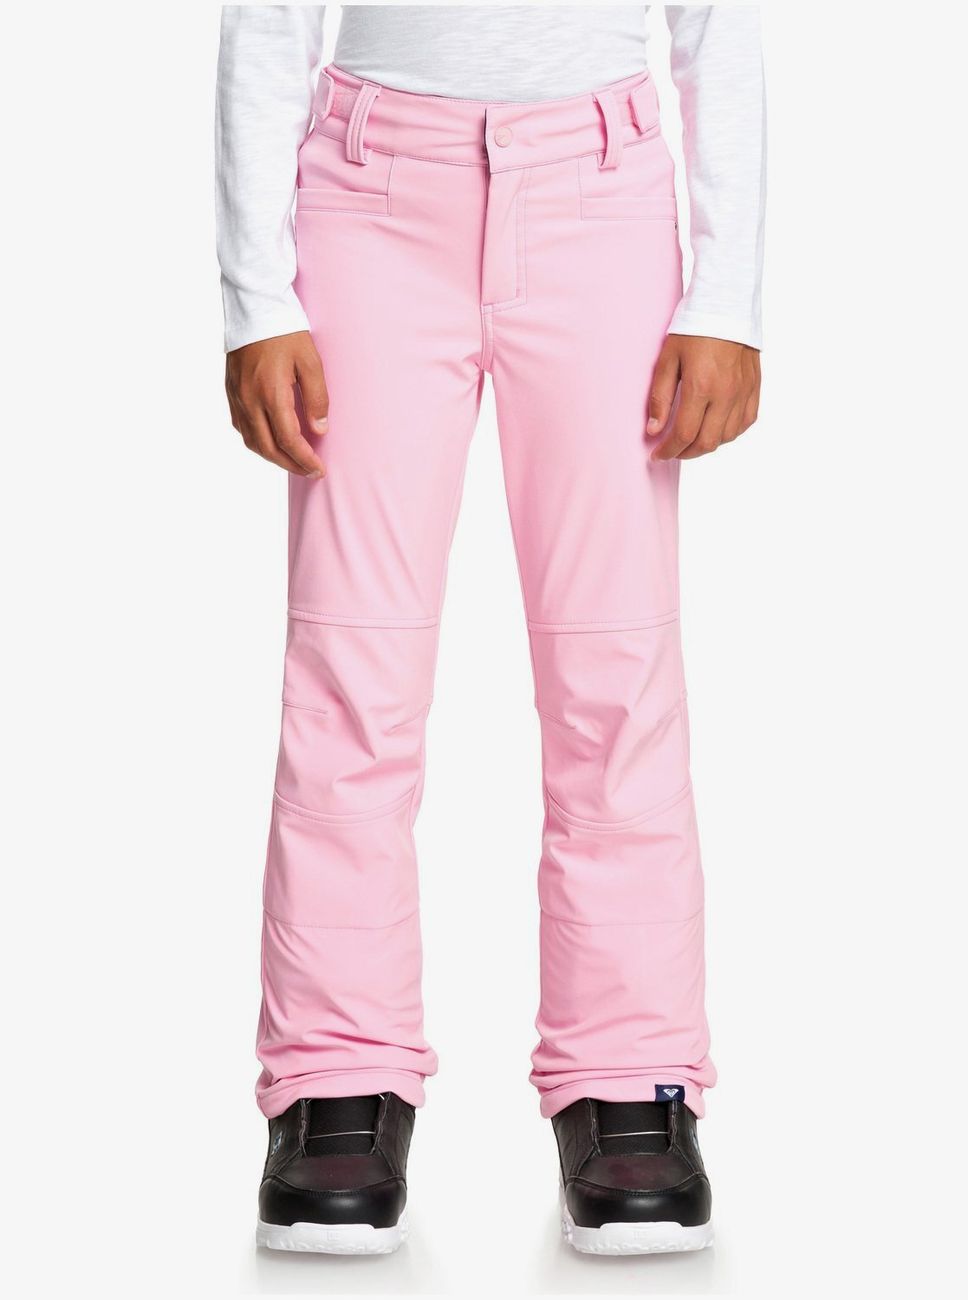 Сноубордические штаны Roxy ( ERGTP03020 ) CREEK GIRL PT G SNPT 2020 MEQ0 Prism Pink-Solid M (3613374538191)